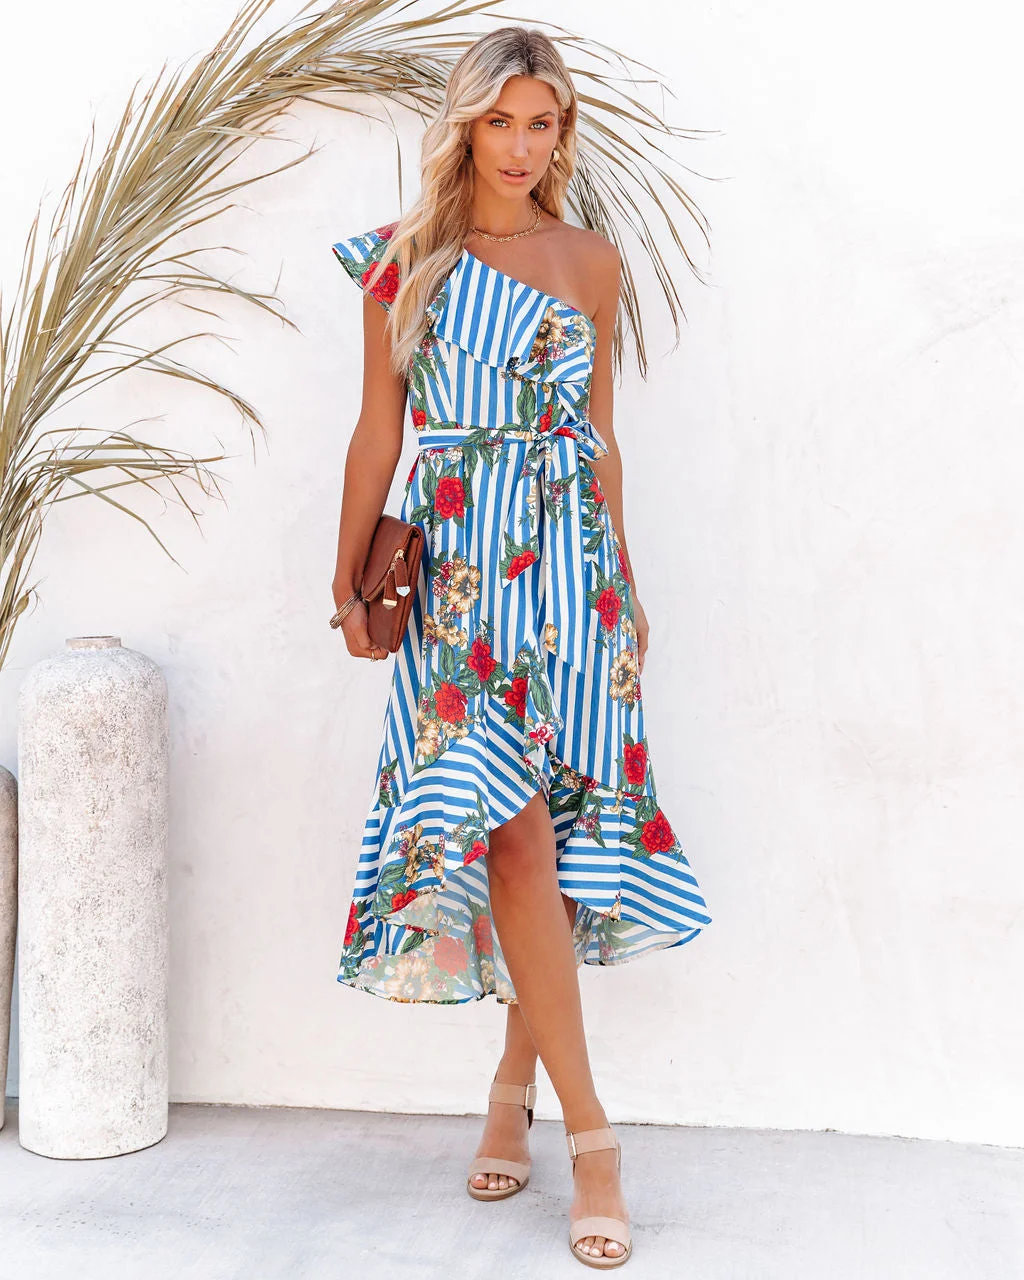 ABEBEY-Summer Vacation Beach Dress Casual Dress Ins Style Photograph Dress Matador One Shoulder Mixed Print High Low Dress